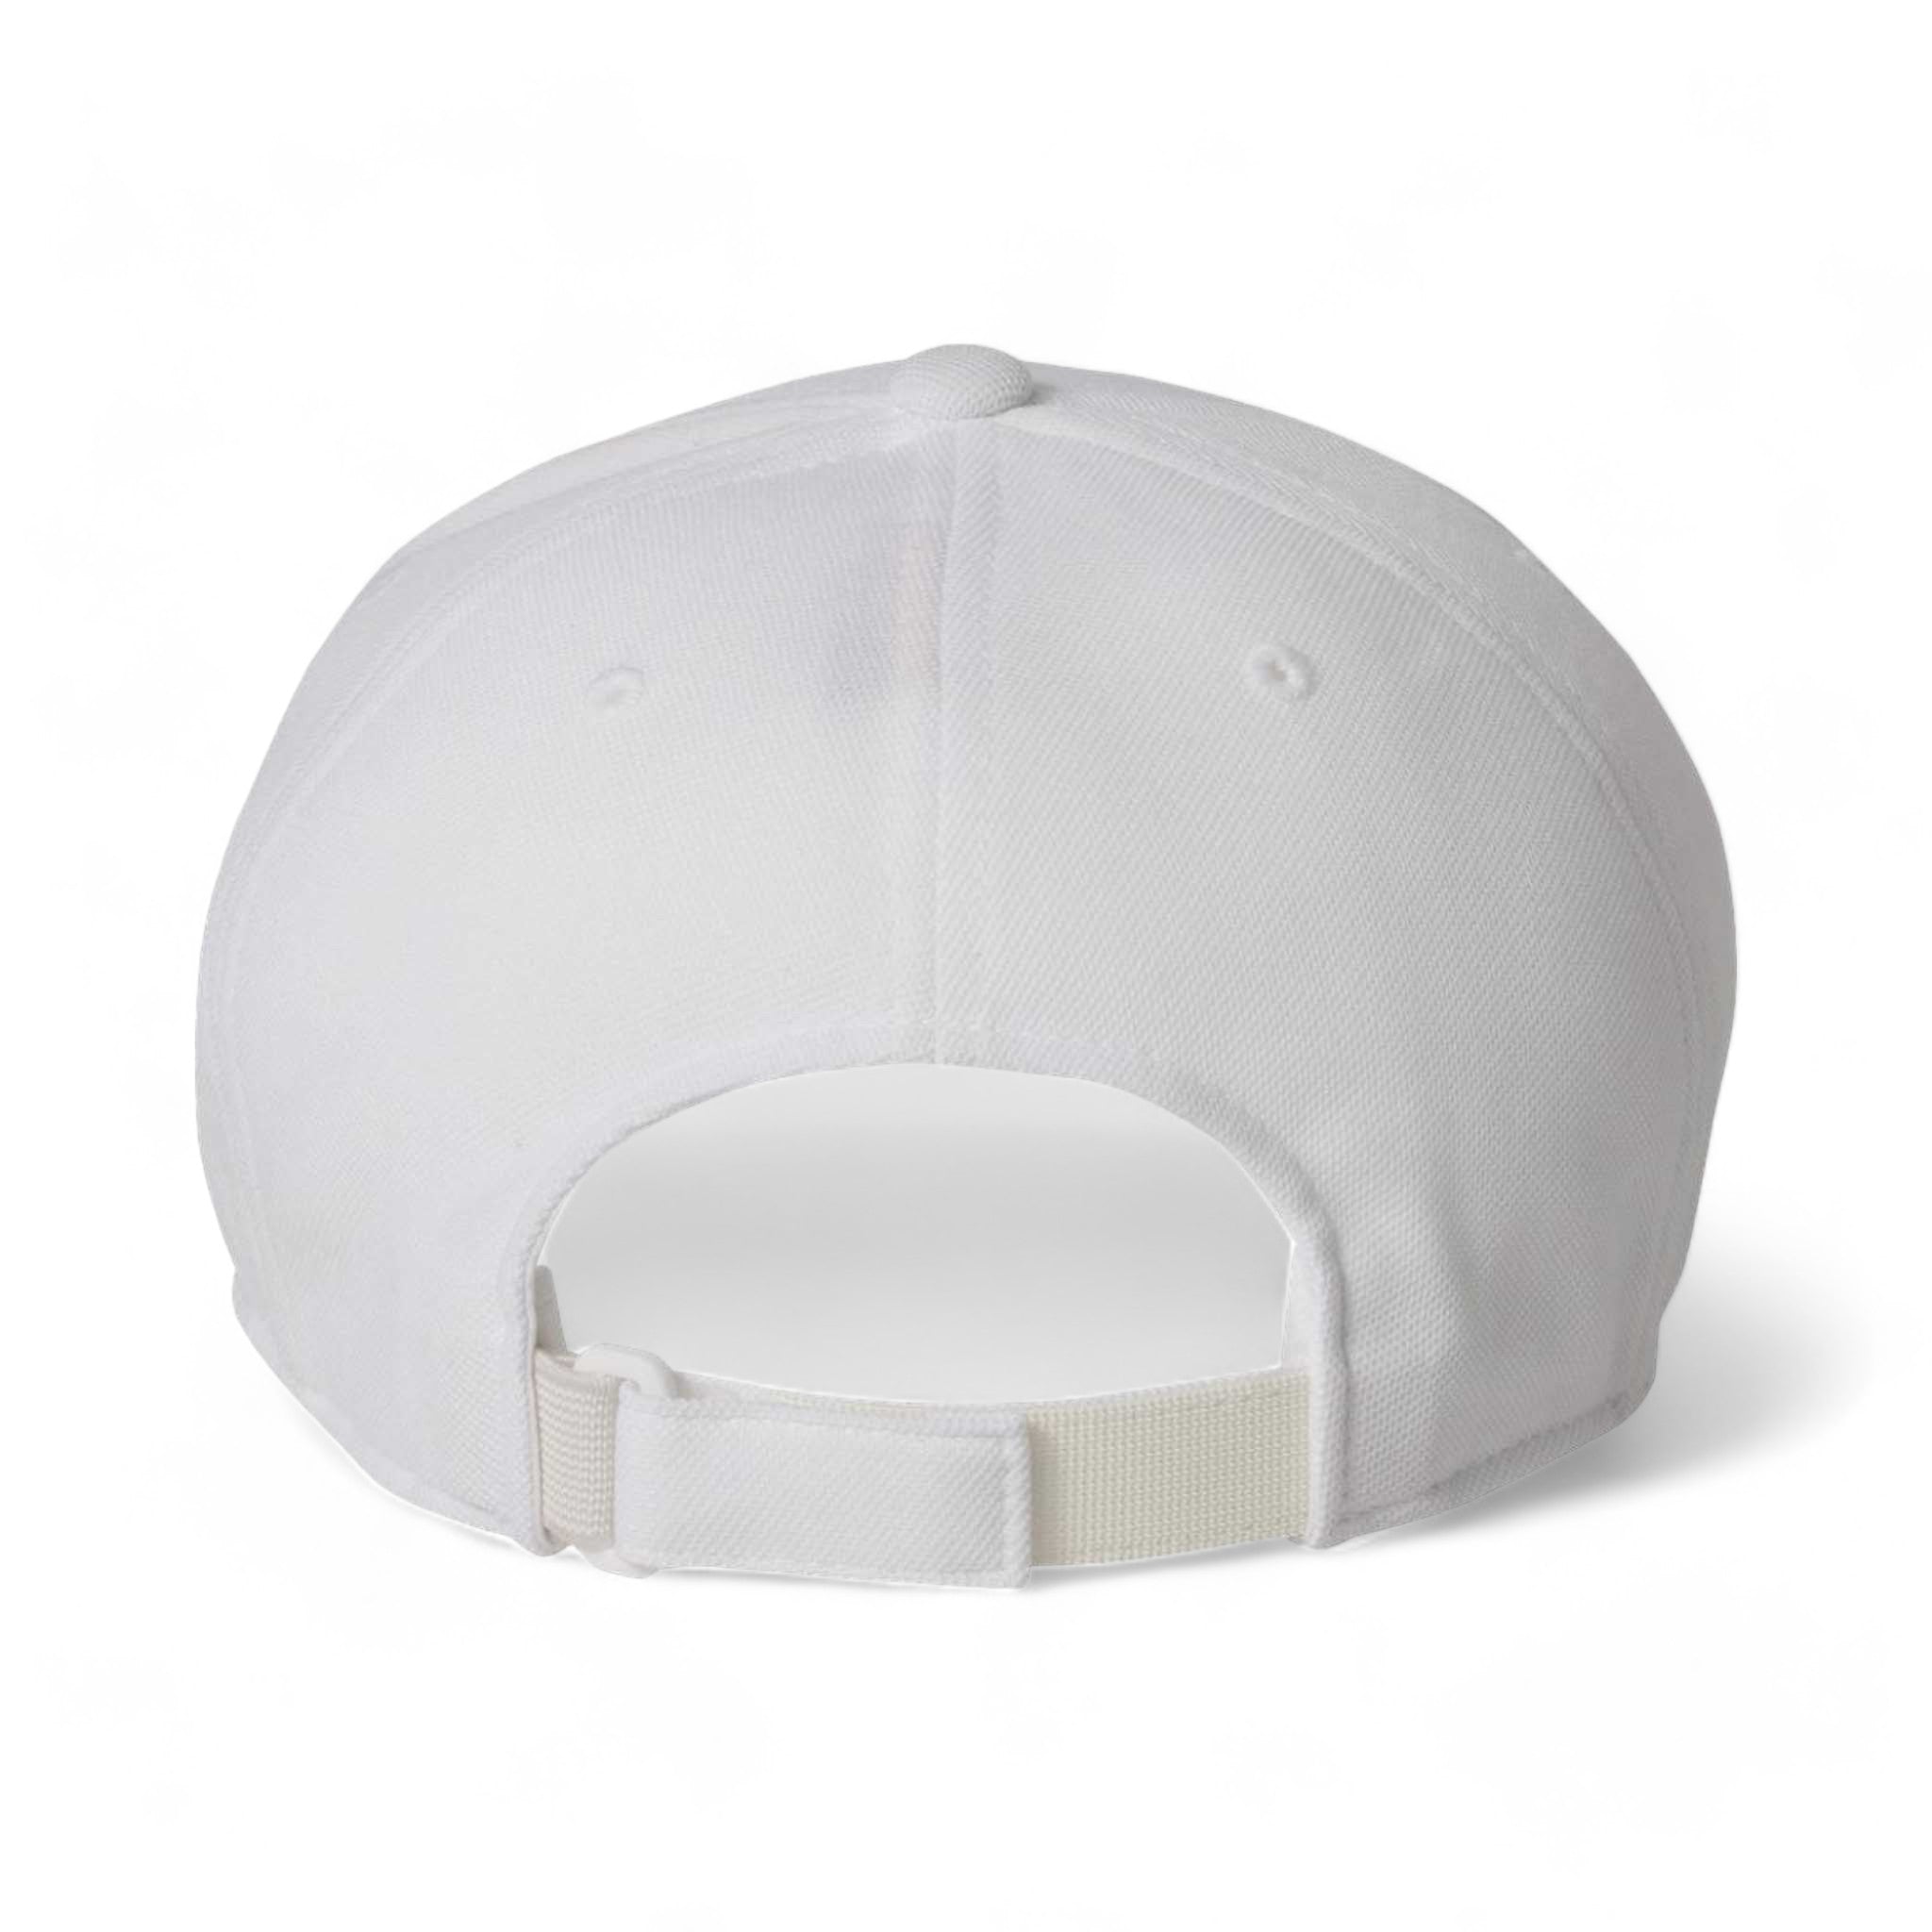 Back view of Flexfit 110P custom hat in white